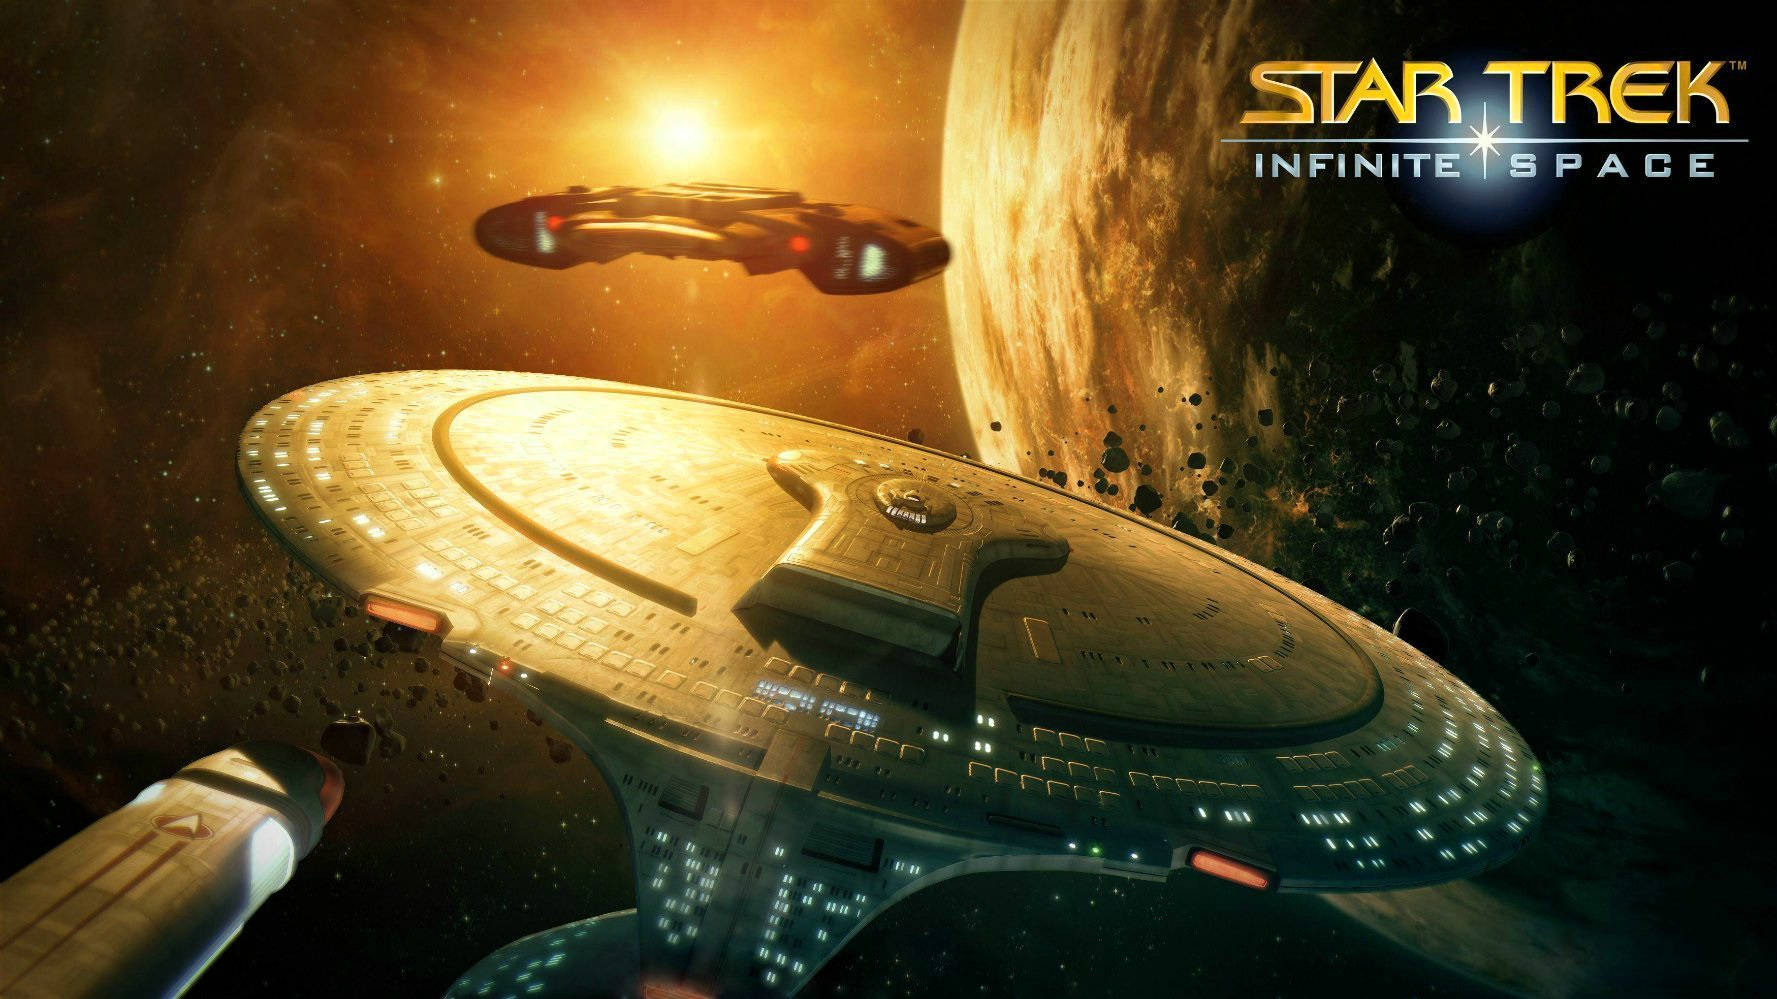 Star Trek Starship Star Trek Infinite Space Background